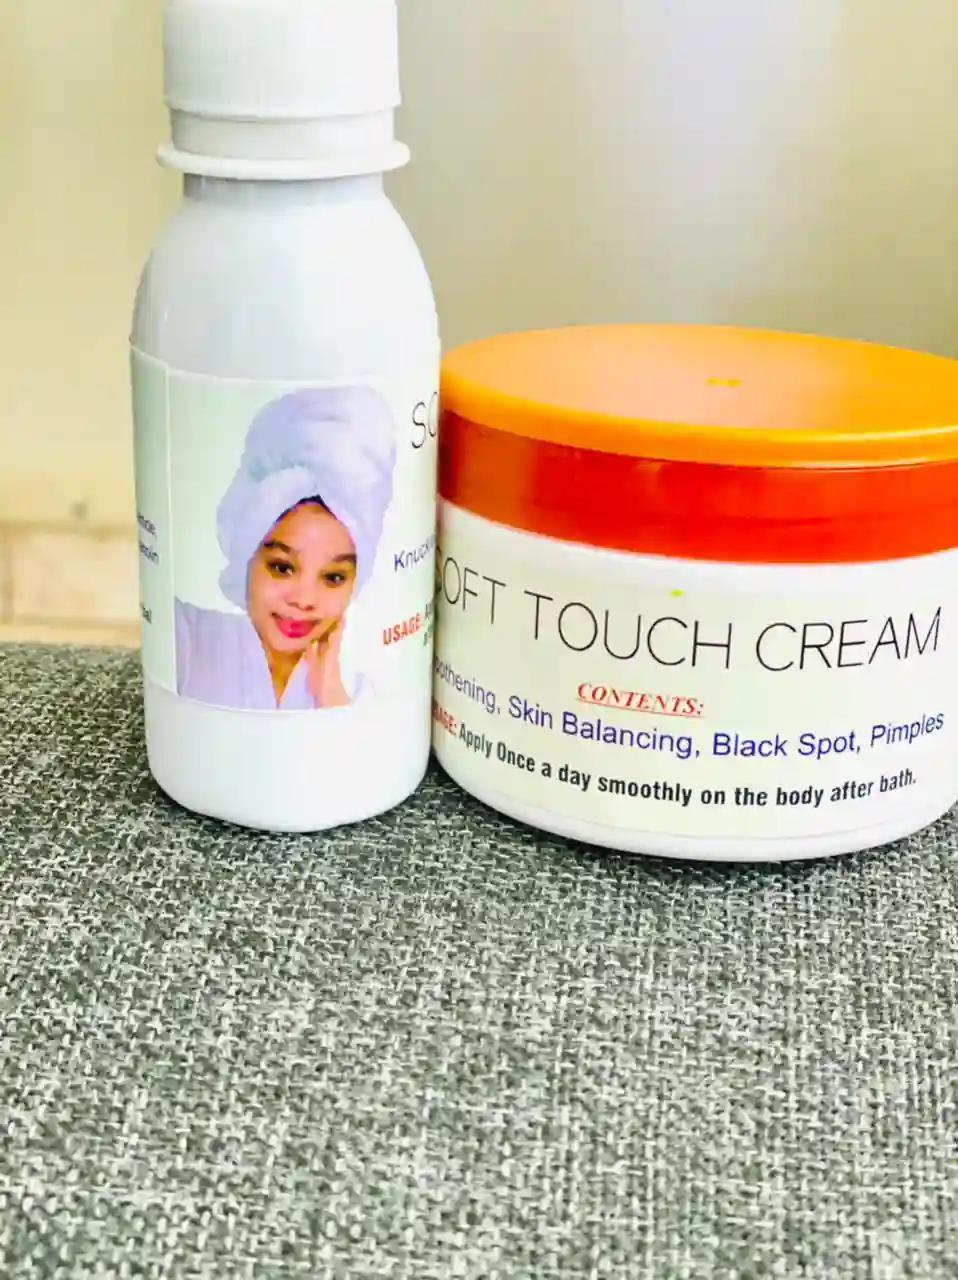 Soft touch cream